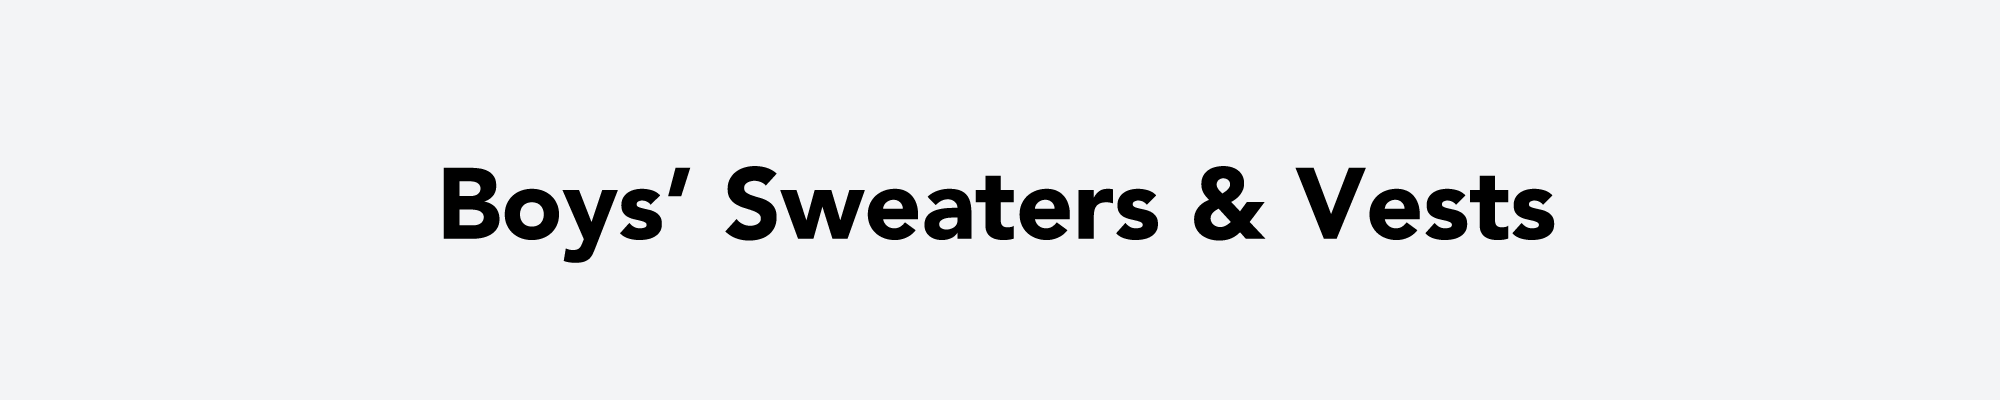 Boys' Sweaters & Vests